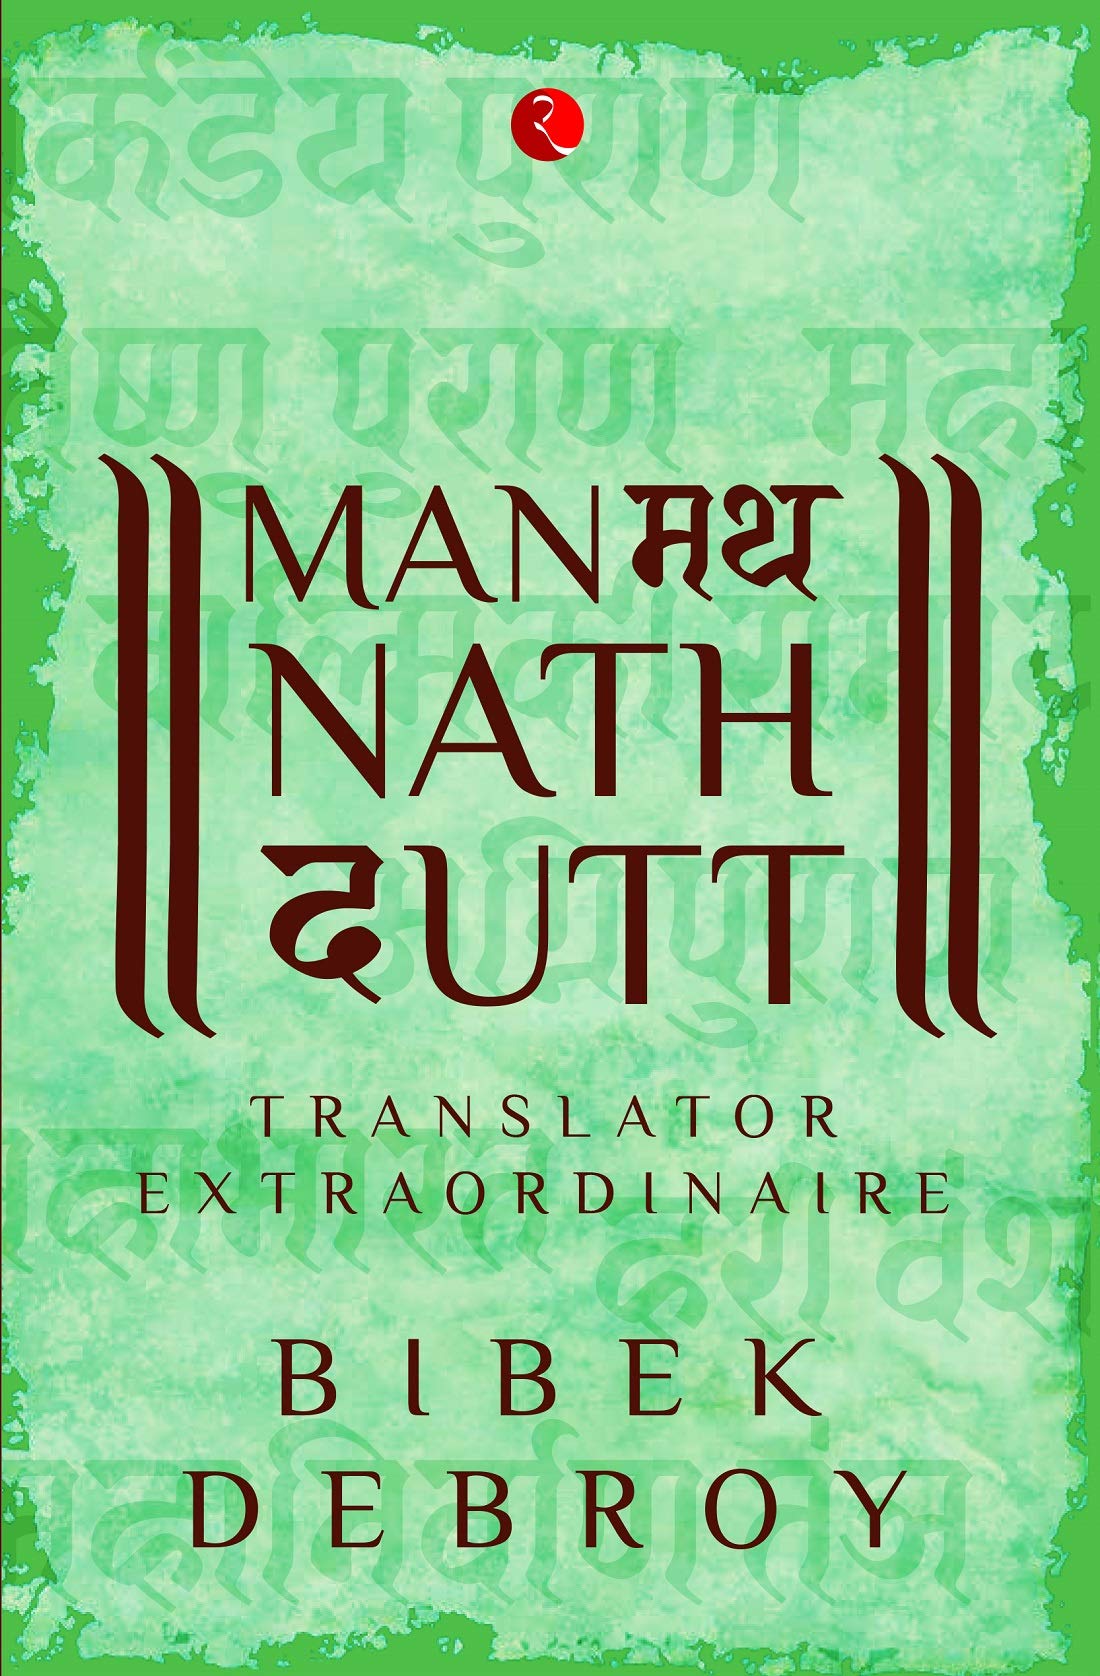 MANMATHA NATH DUTT TRANSLATOR EXTRAORDINAIRE